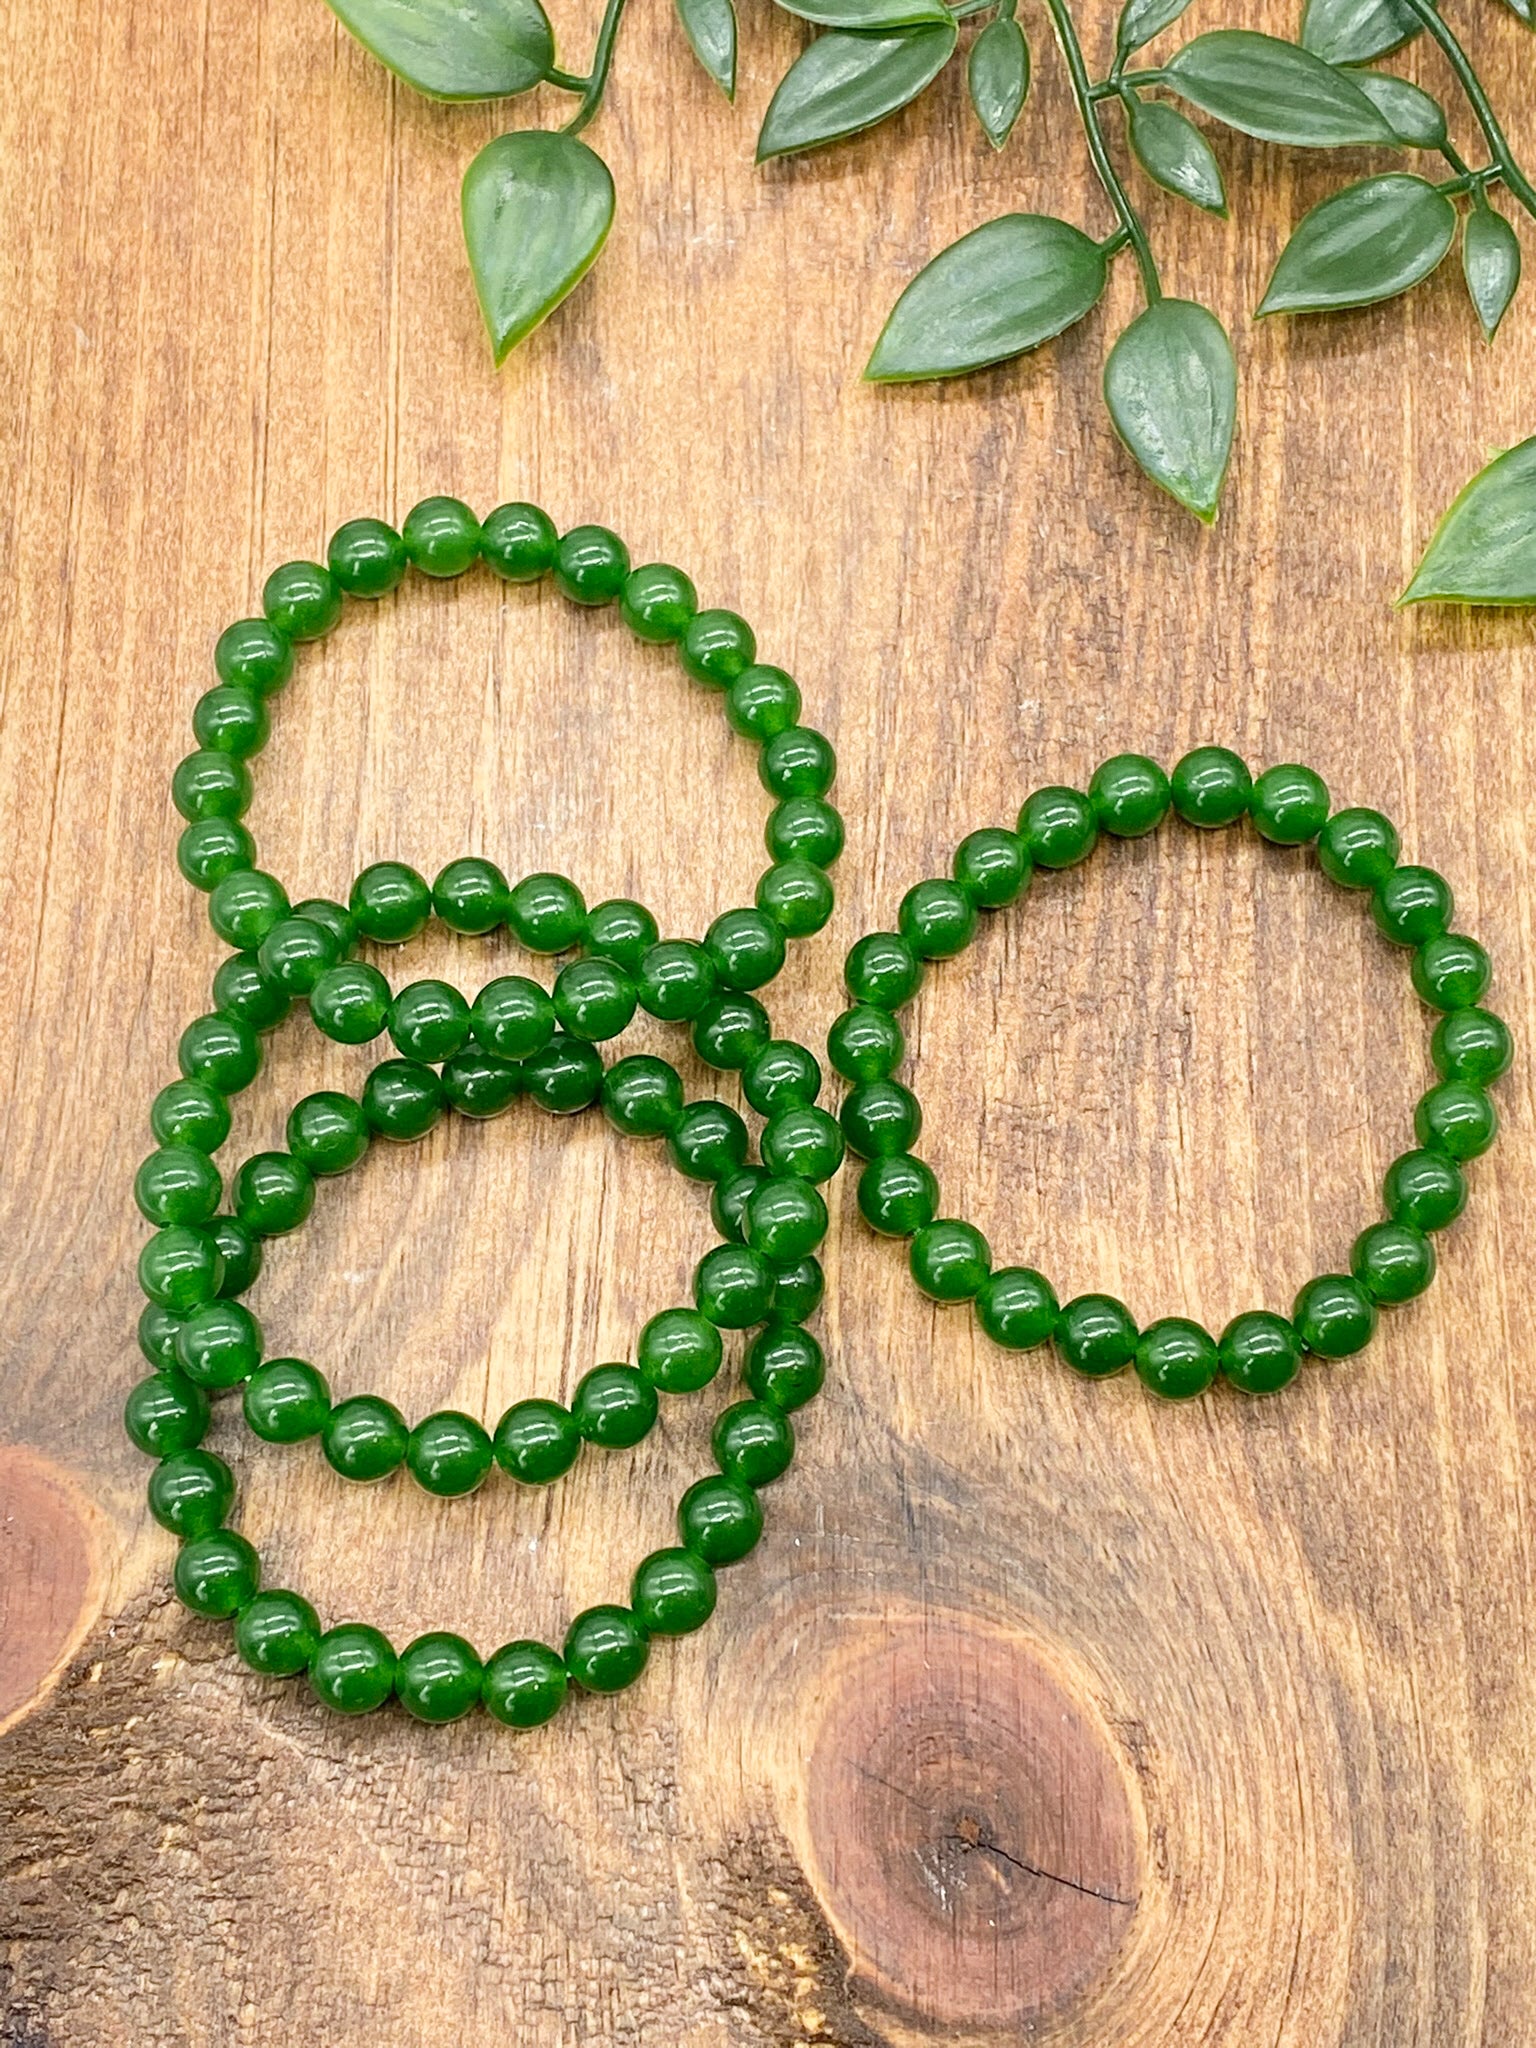  Taozyao Natural Green Jade Bangle Bracelet for Women Girls  Genuine with Certificate丨100% Grade A Jade Handmade Bracelets - Healing